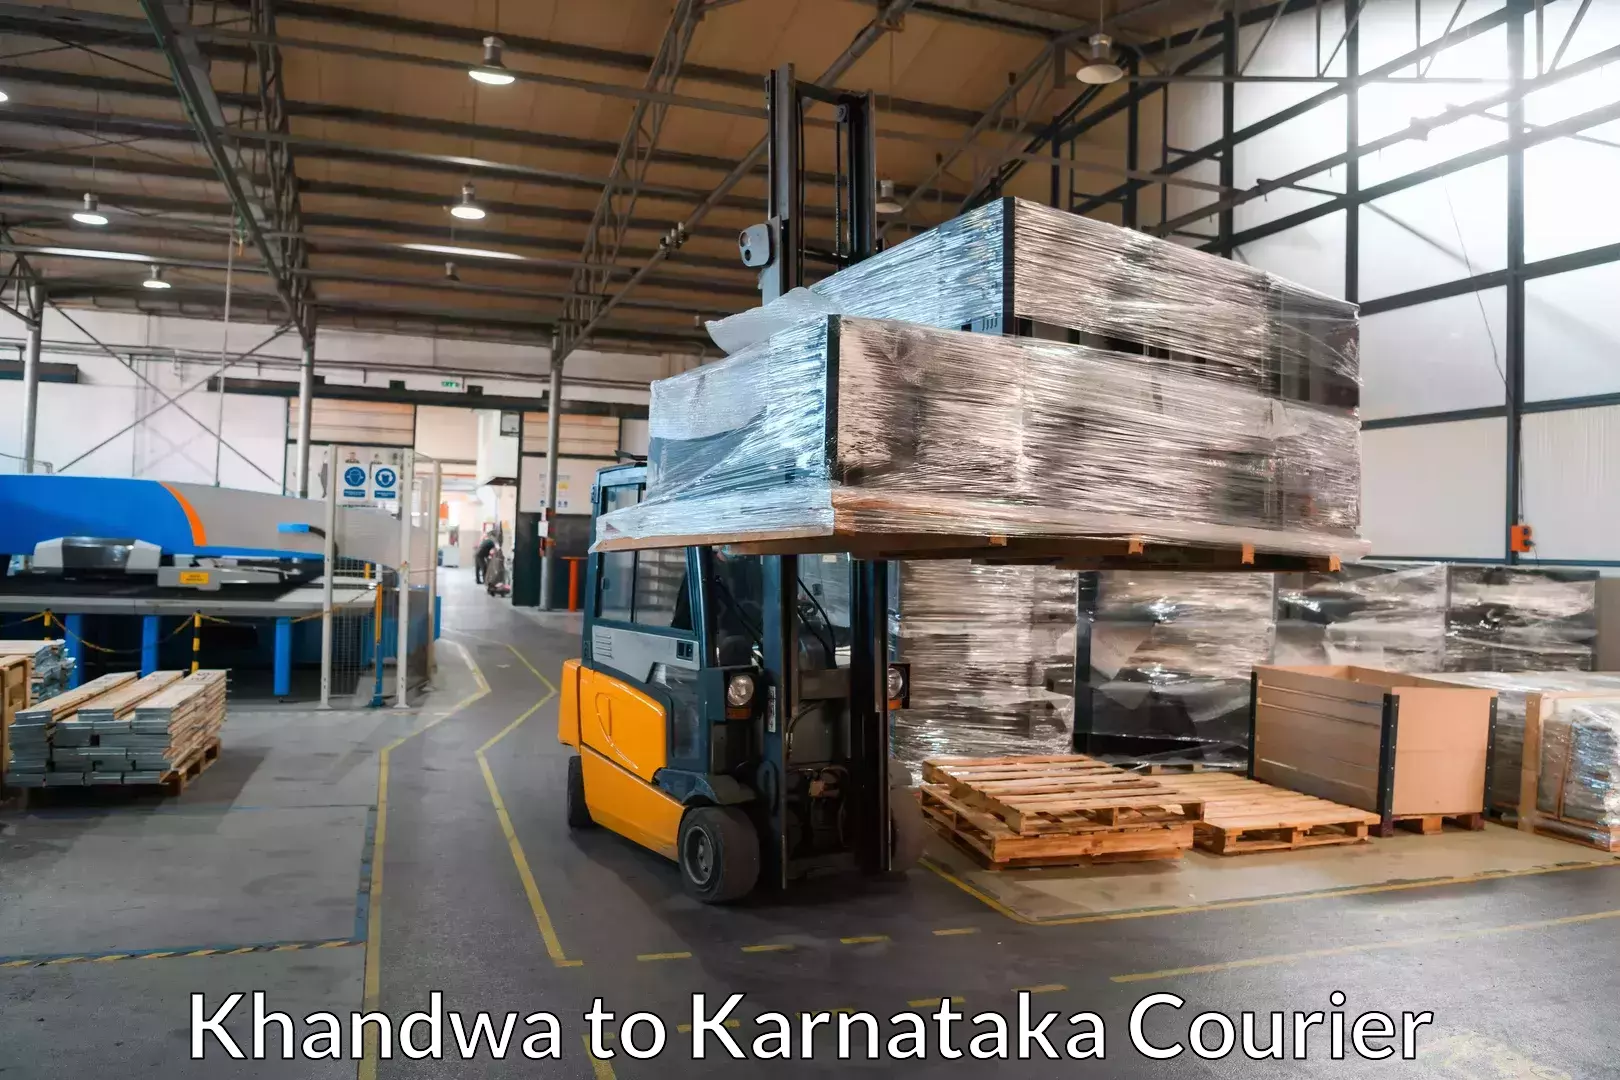 Trusted moving company Khandwa to Koppal